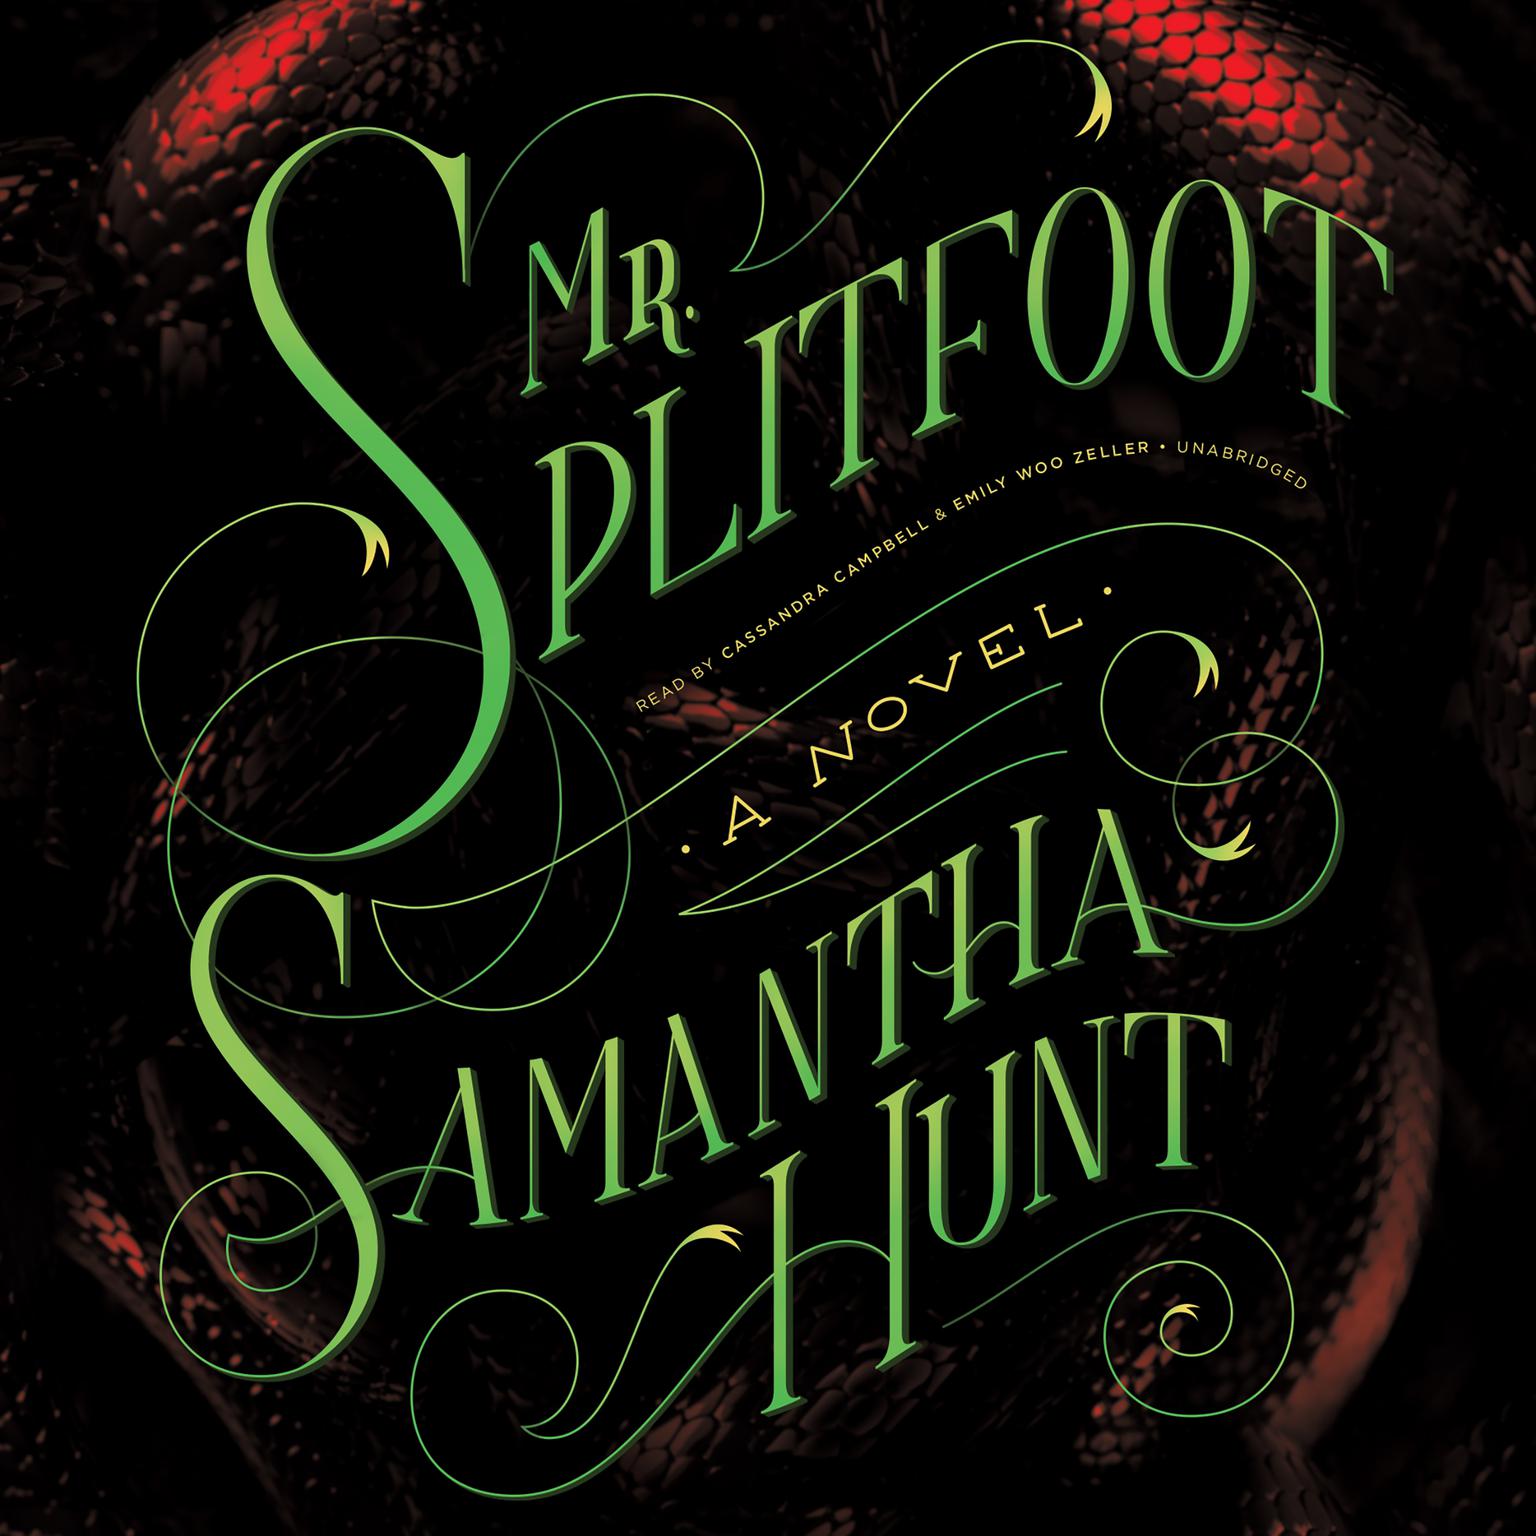 Mr. Splitfoot Audiobook by Samantha Hunt — Download Now